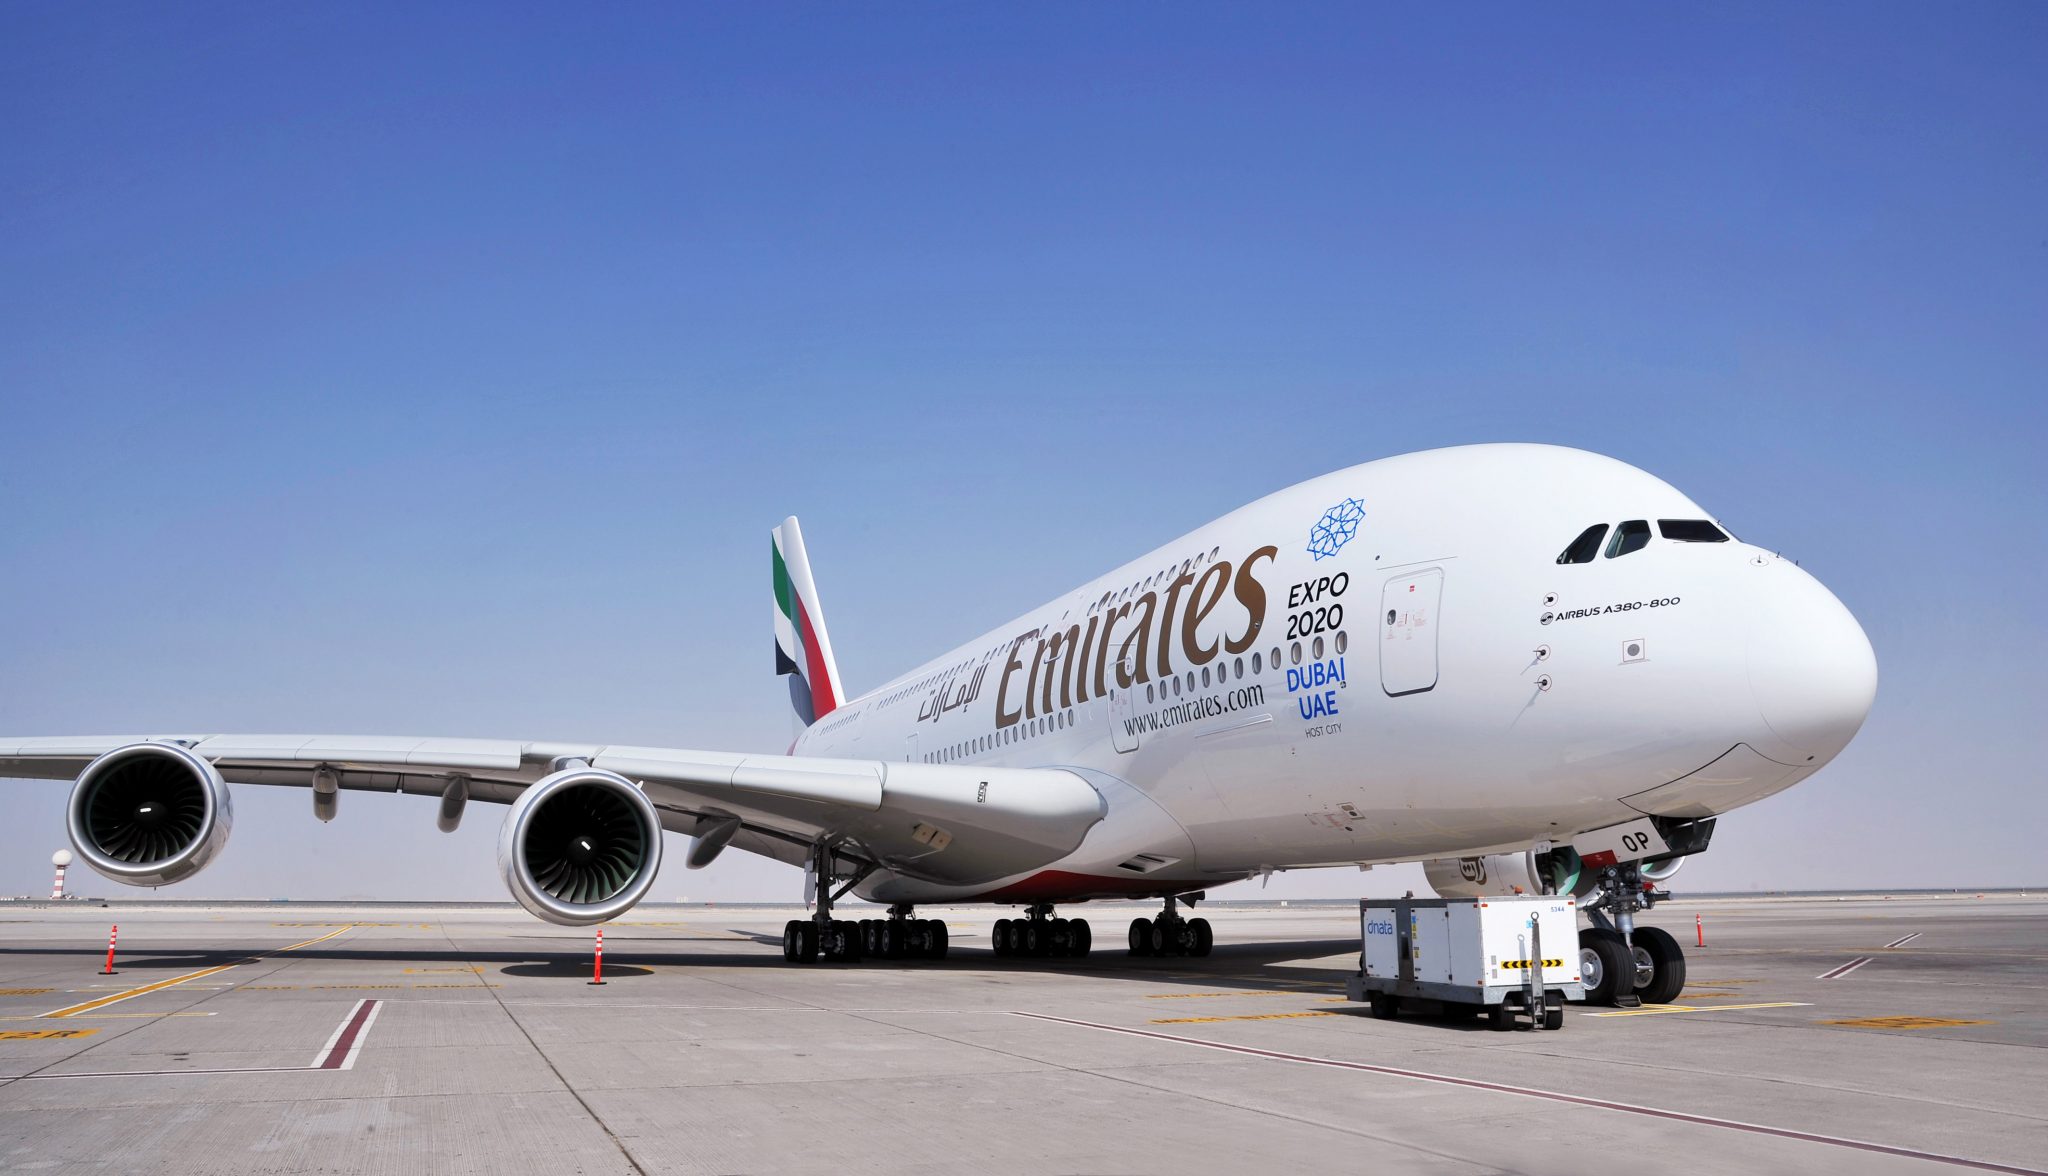 Will Emirates Continue Hiring Cabin Crew in 2019?